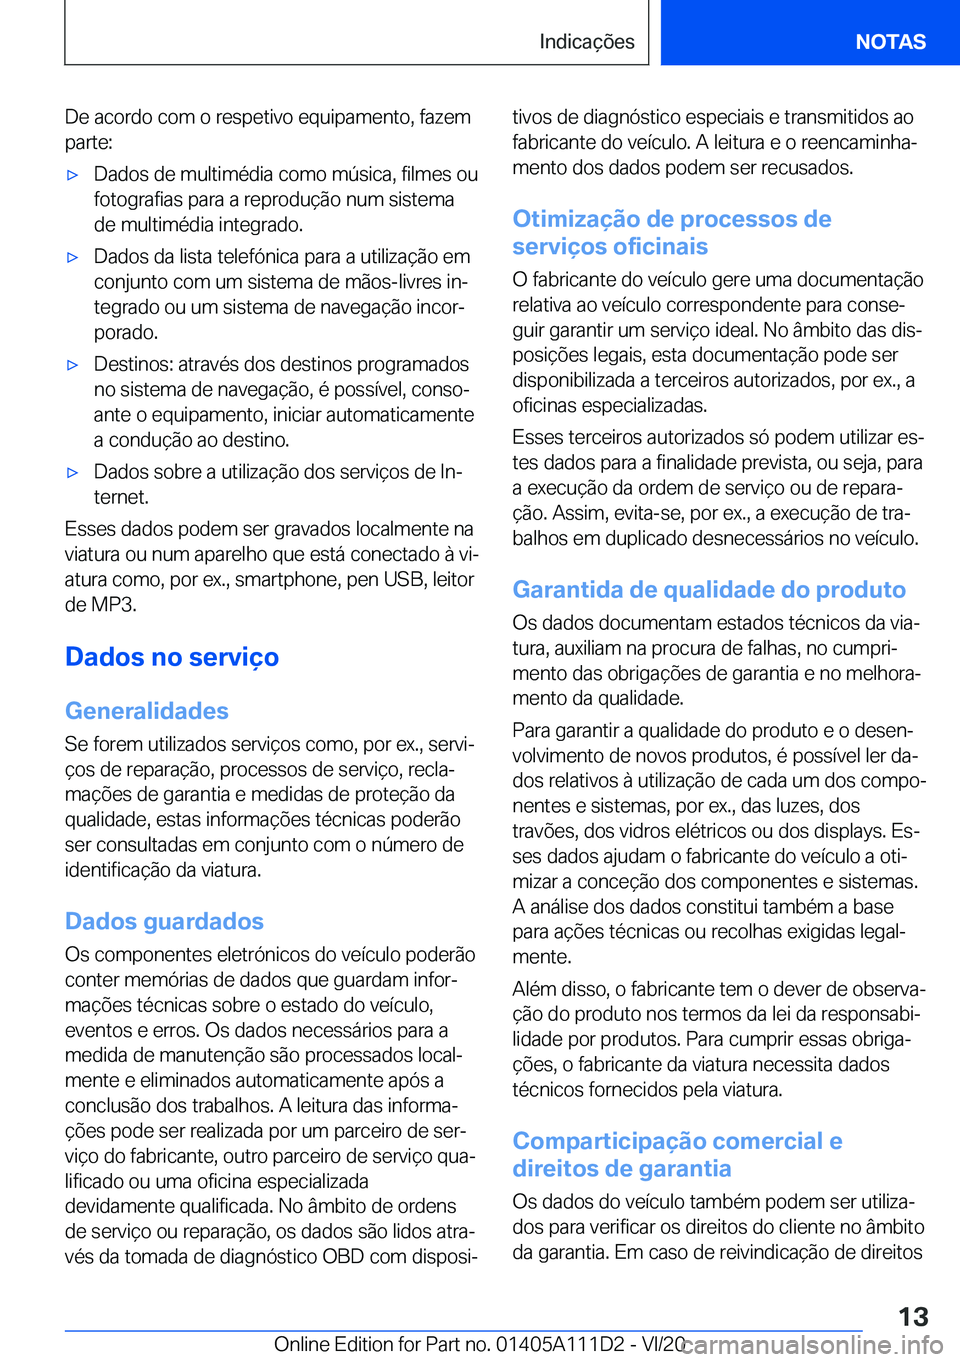 BMW 3 SERIES SEDAN PLUG-IN HYBRID 2021  Manual do condutor (in Portuguese) �D�e��a�c�o�r�d�o��c�o�m��o��r�e�s�p�e�t�i�v�o��e�q�u�i�p�a�m�e�n�t�o�,��f�a�z�e�m�p�a�r�t�e�:'x�D�a�d�o�s��d�e��m�u�l�t�i�m�é�d�i�a��c�o�m�o��m�